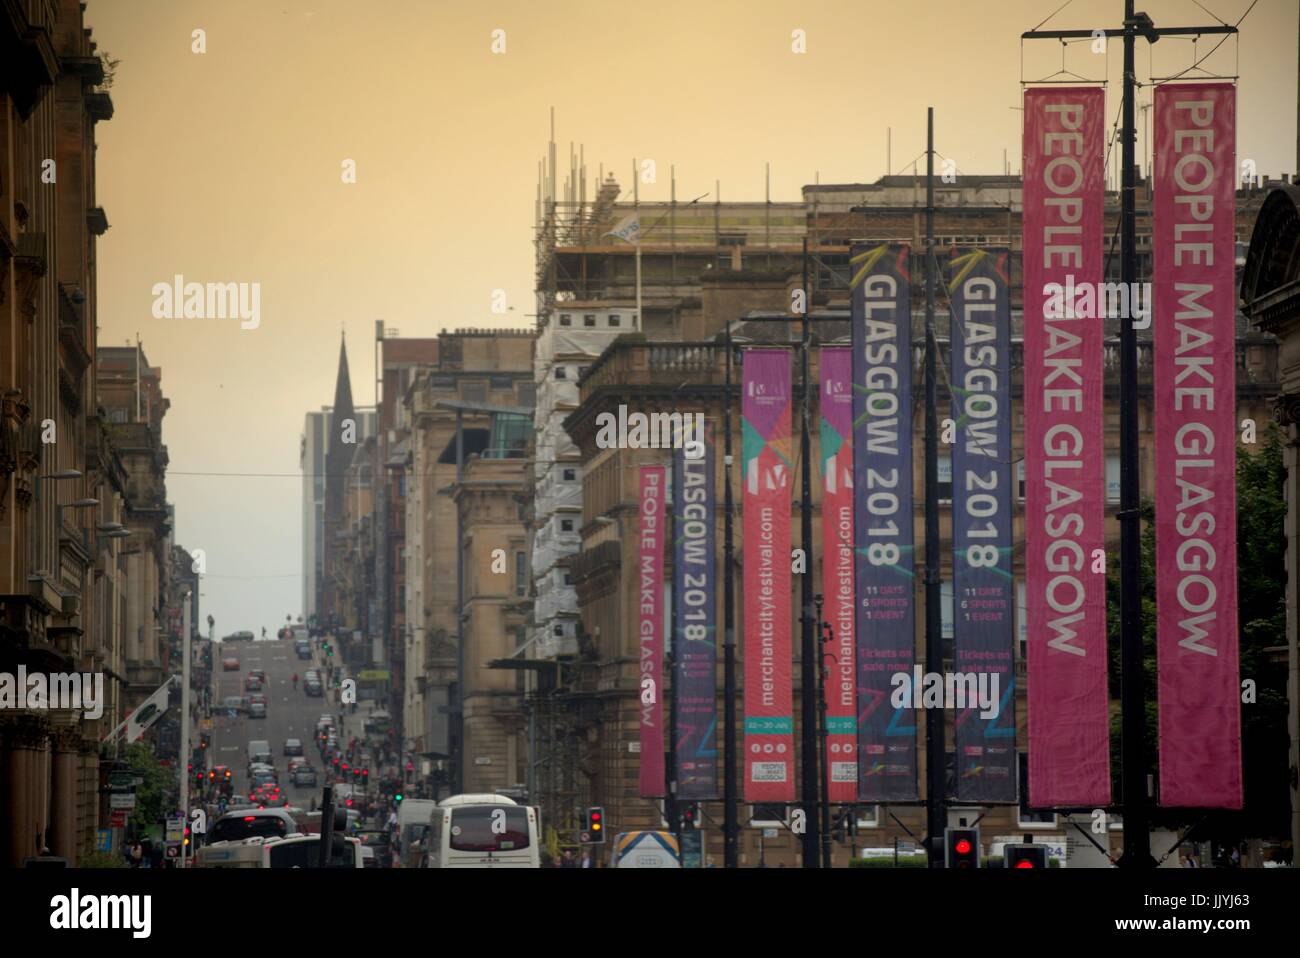 People Make Glasgow Glasgow 2018 banners George square heavy traffic smog exhaust fume aura Stock Photo